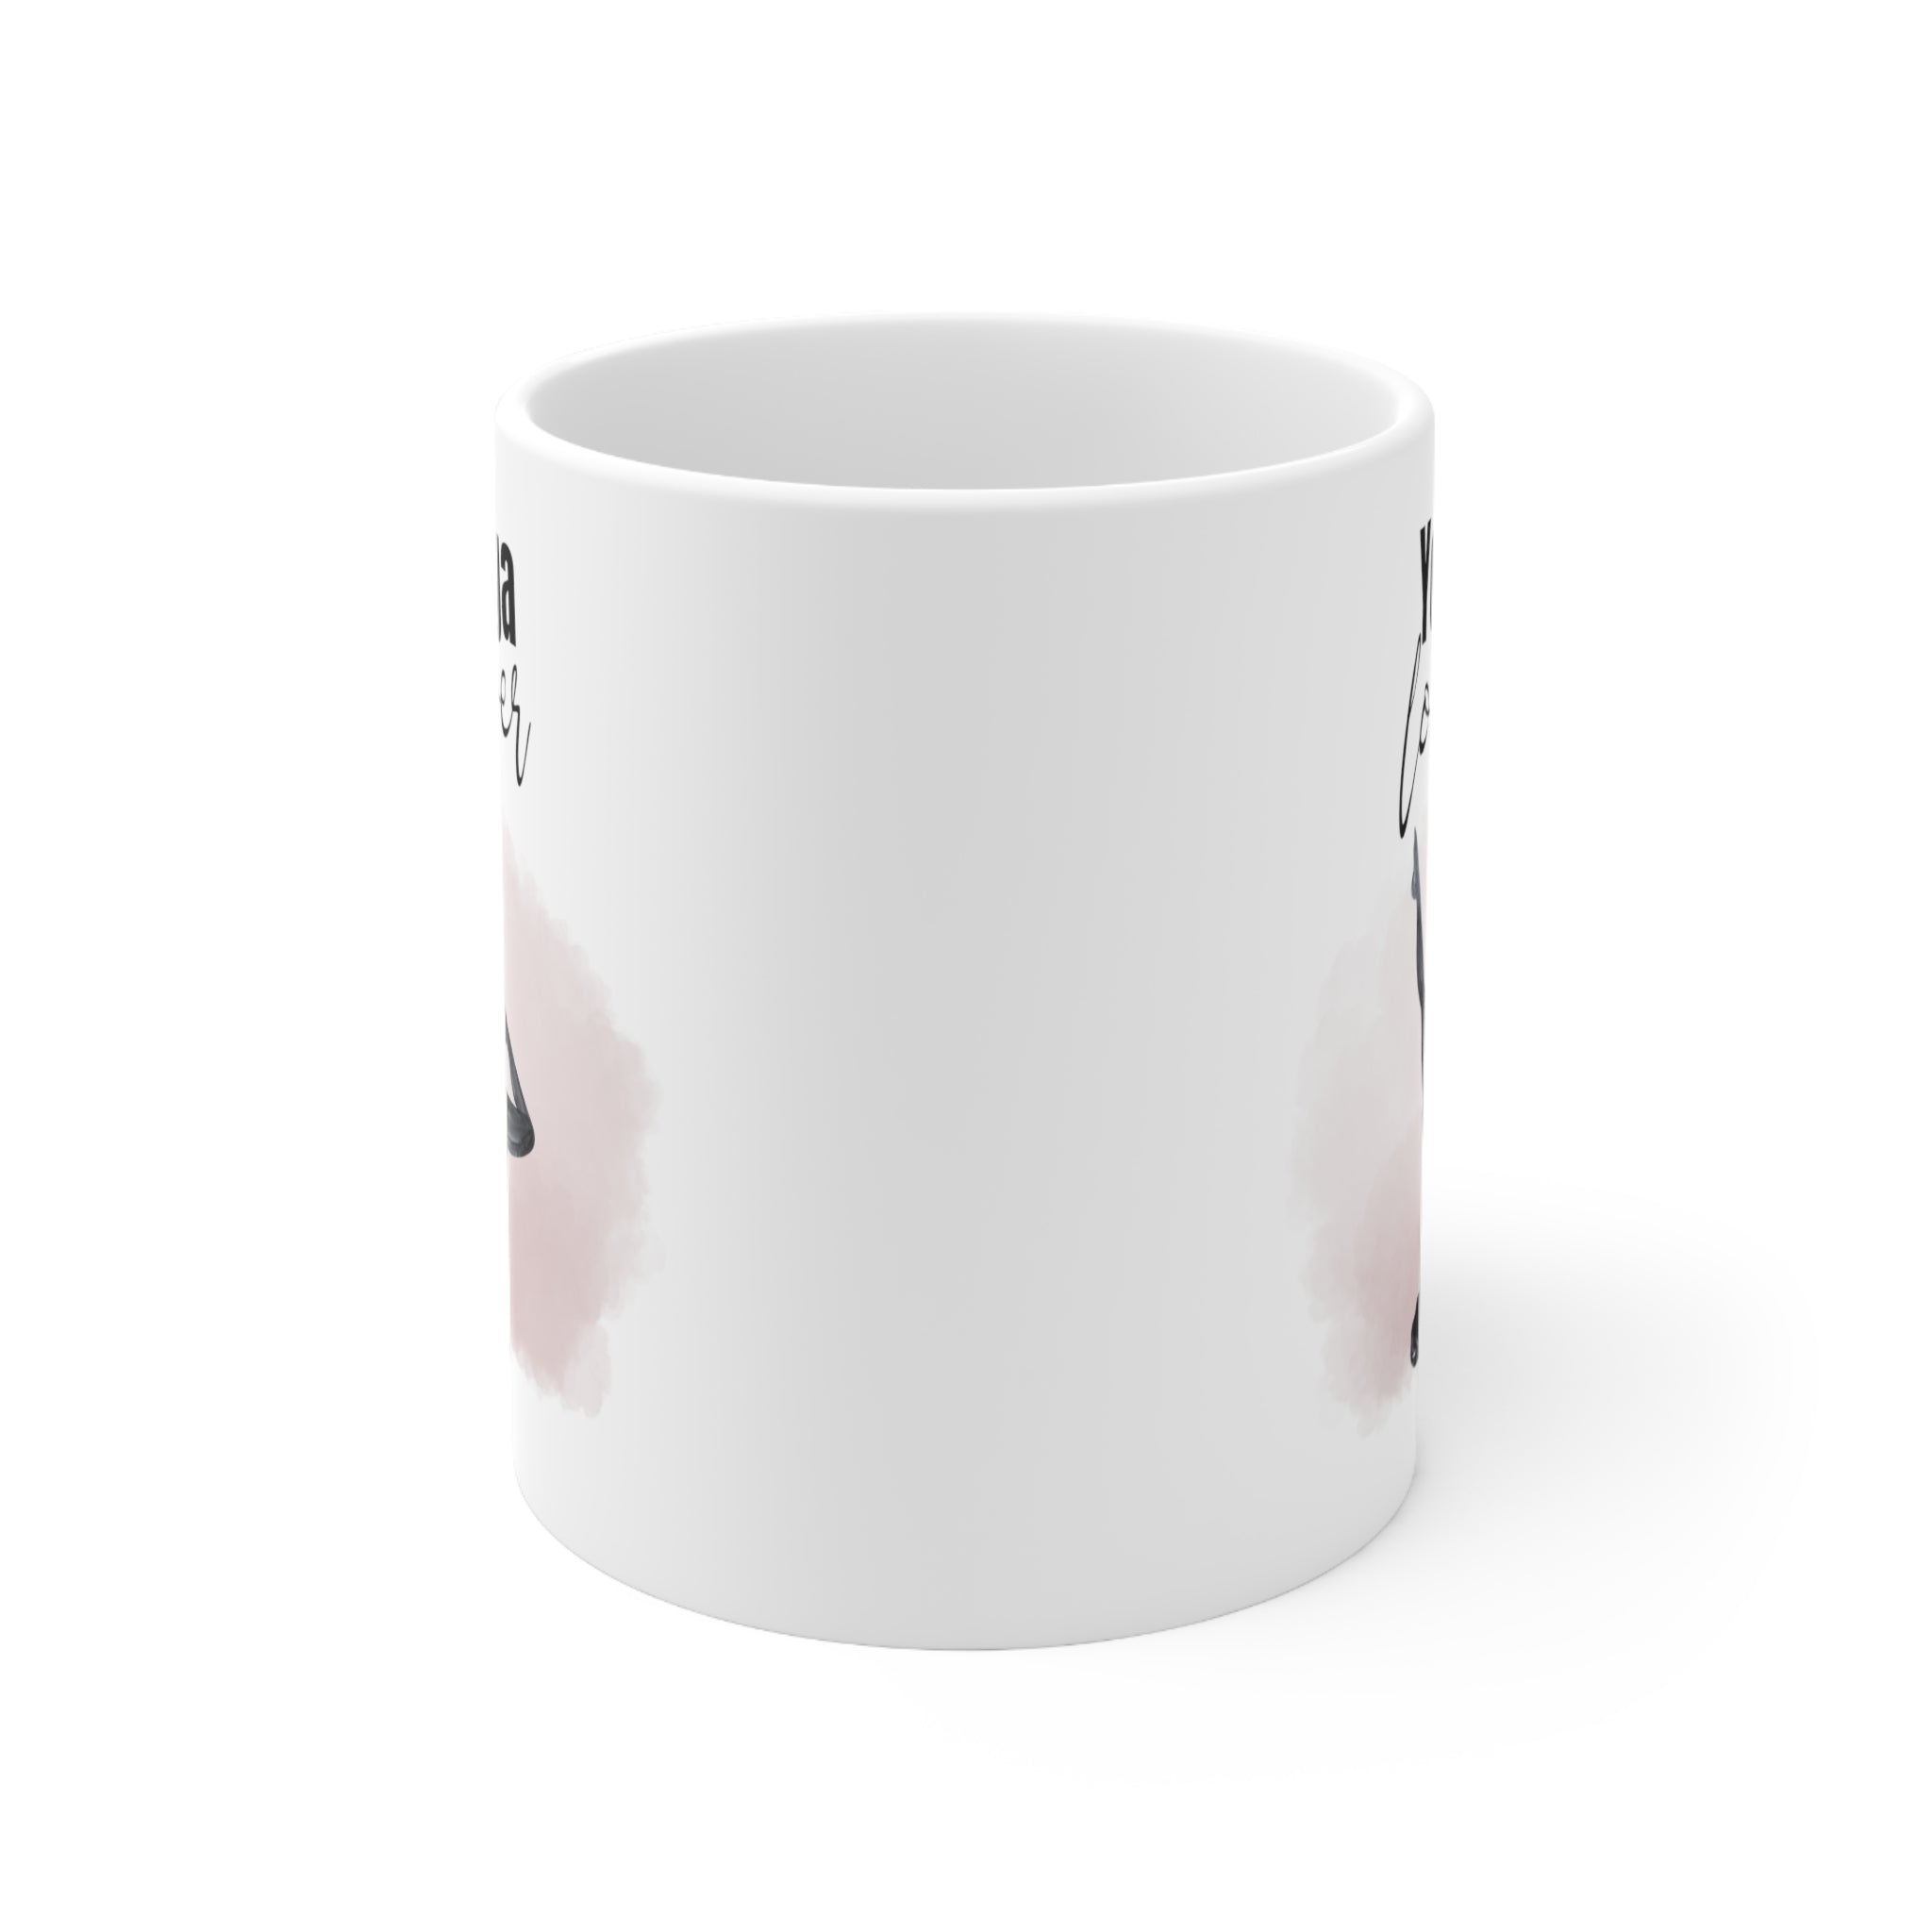 Yoga Lover Ceramic Mug 11oz